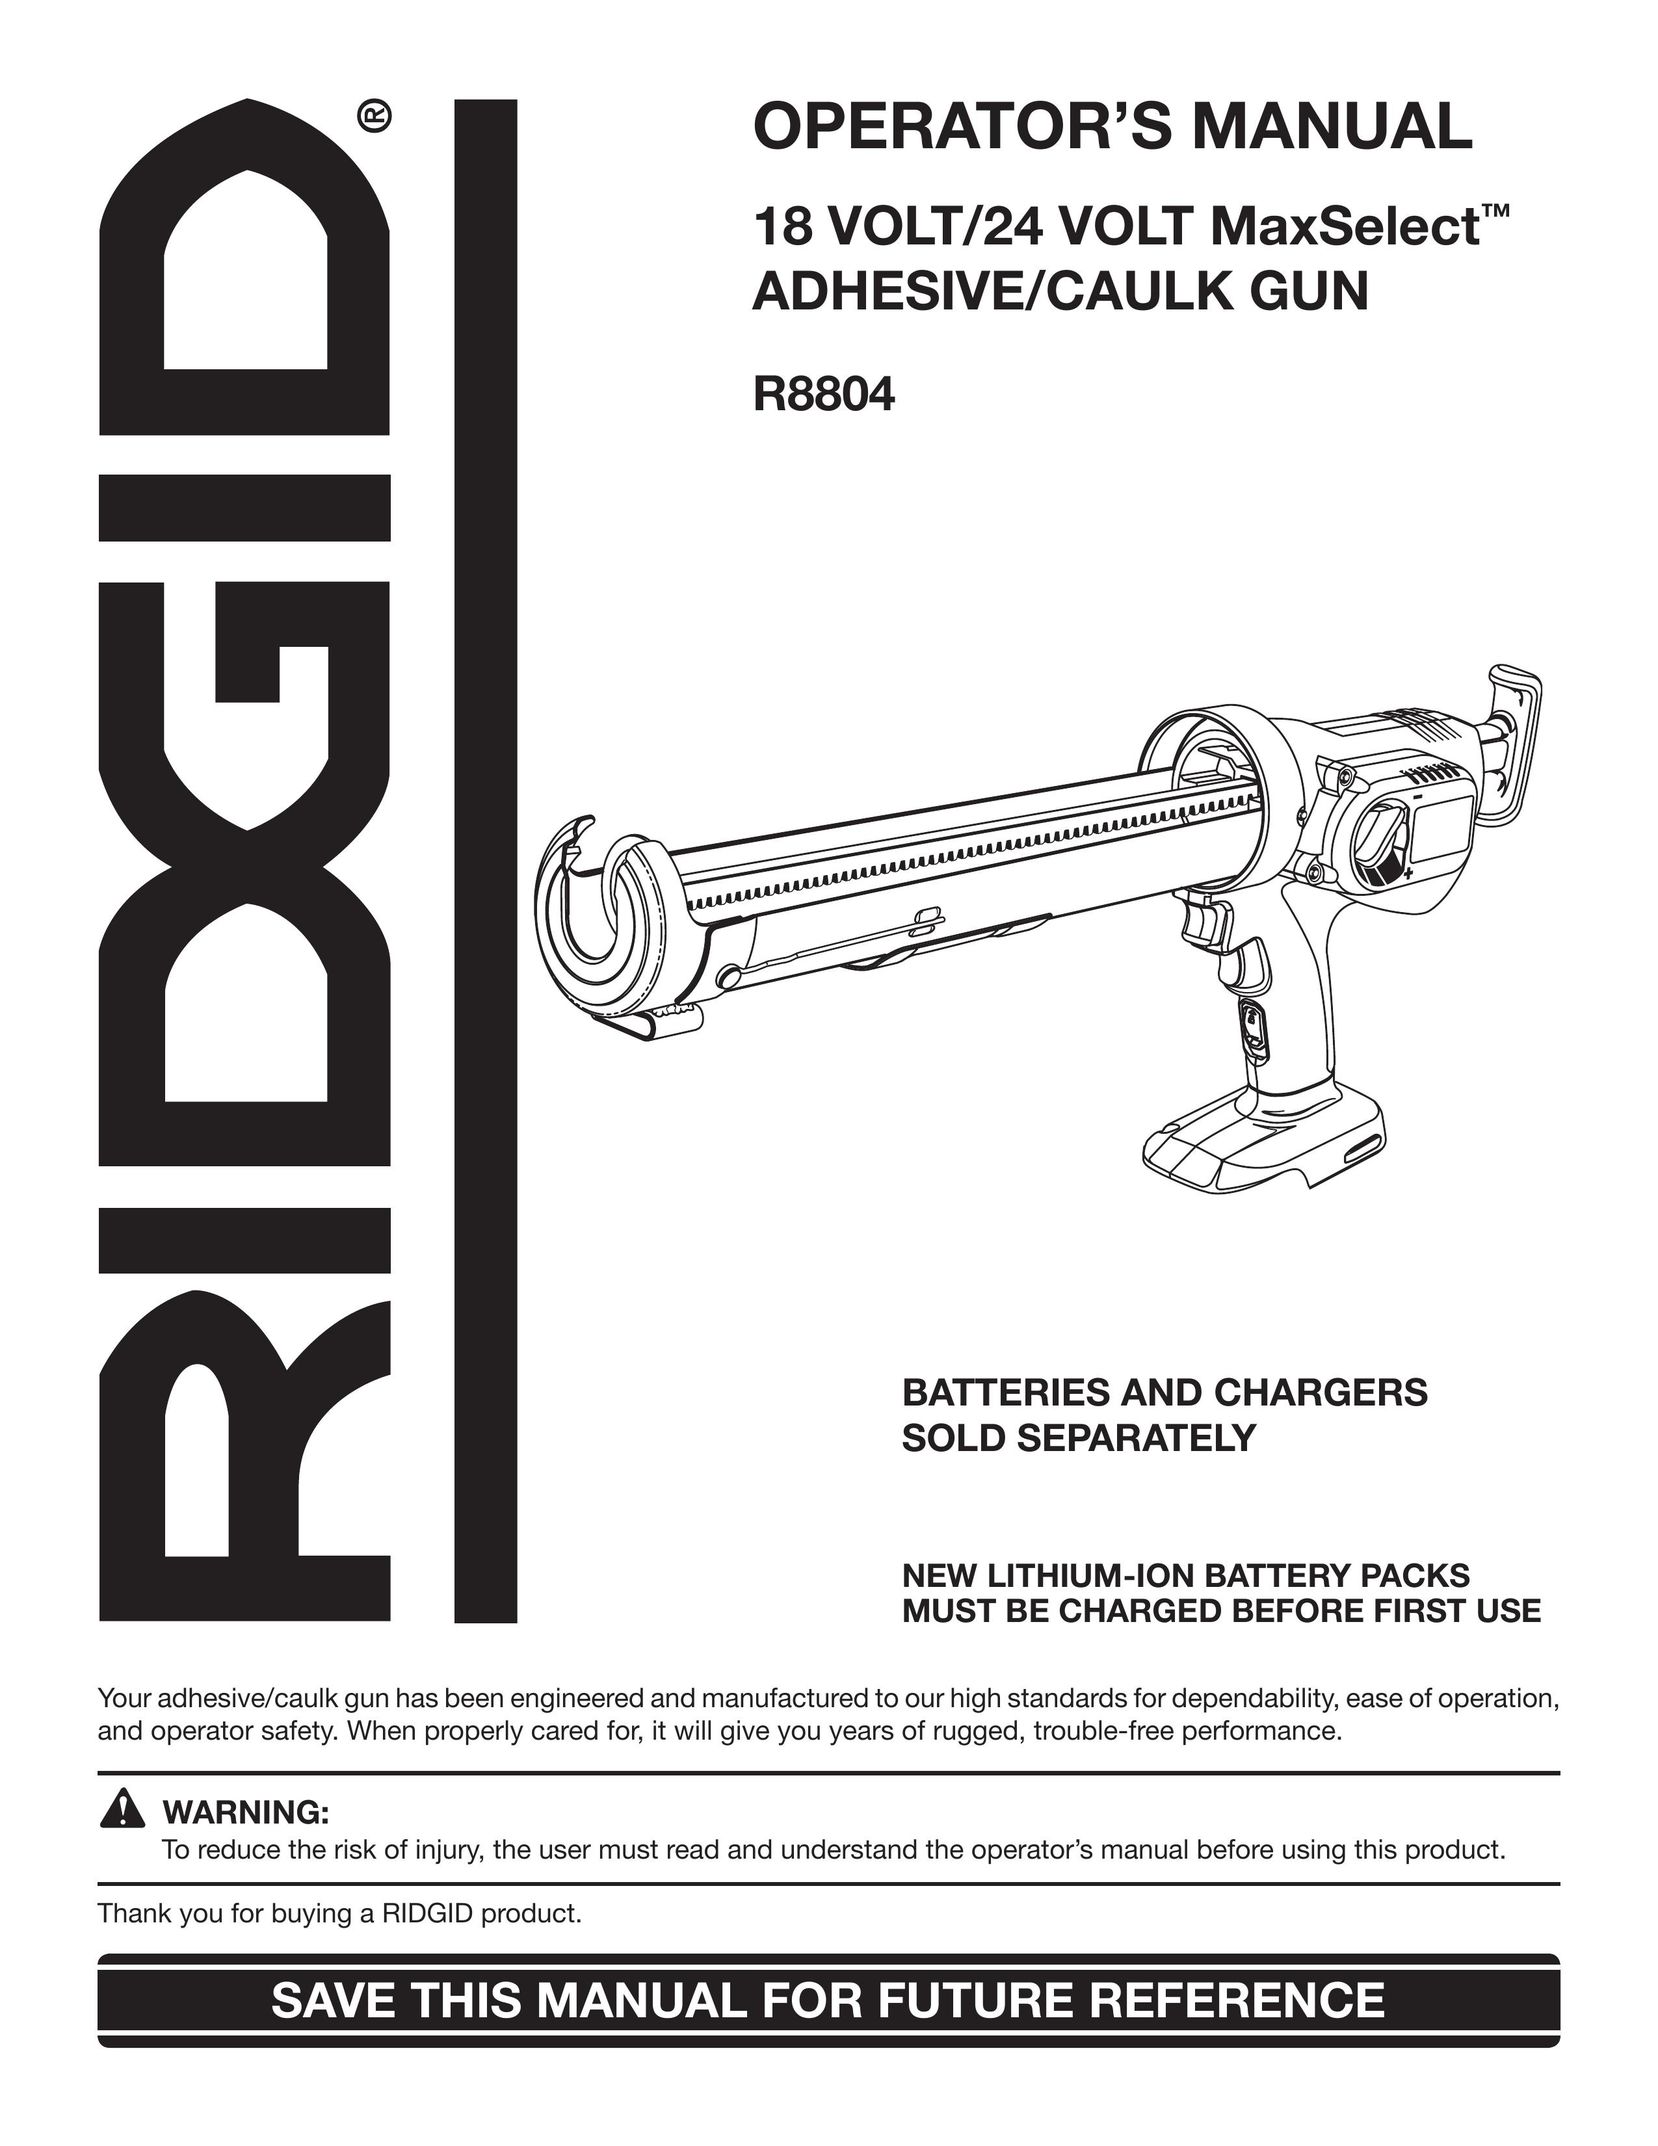 RIDGID R8804 Caulking Gun User Manual